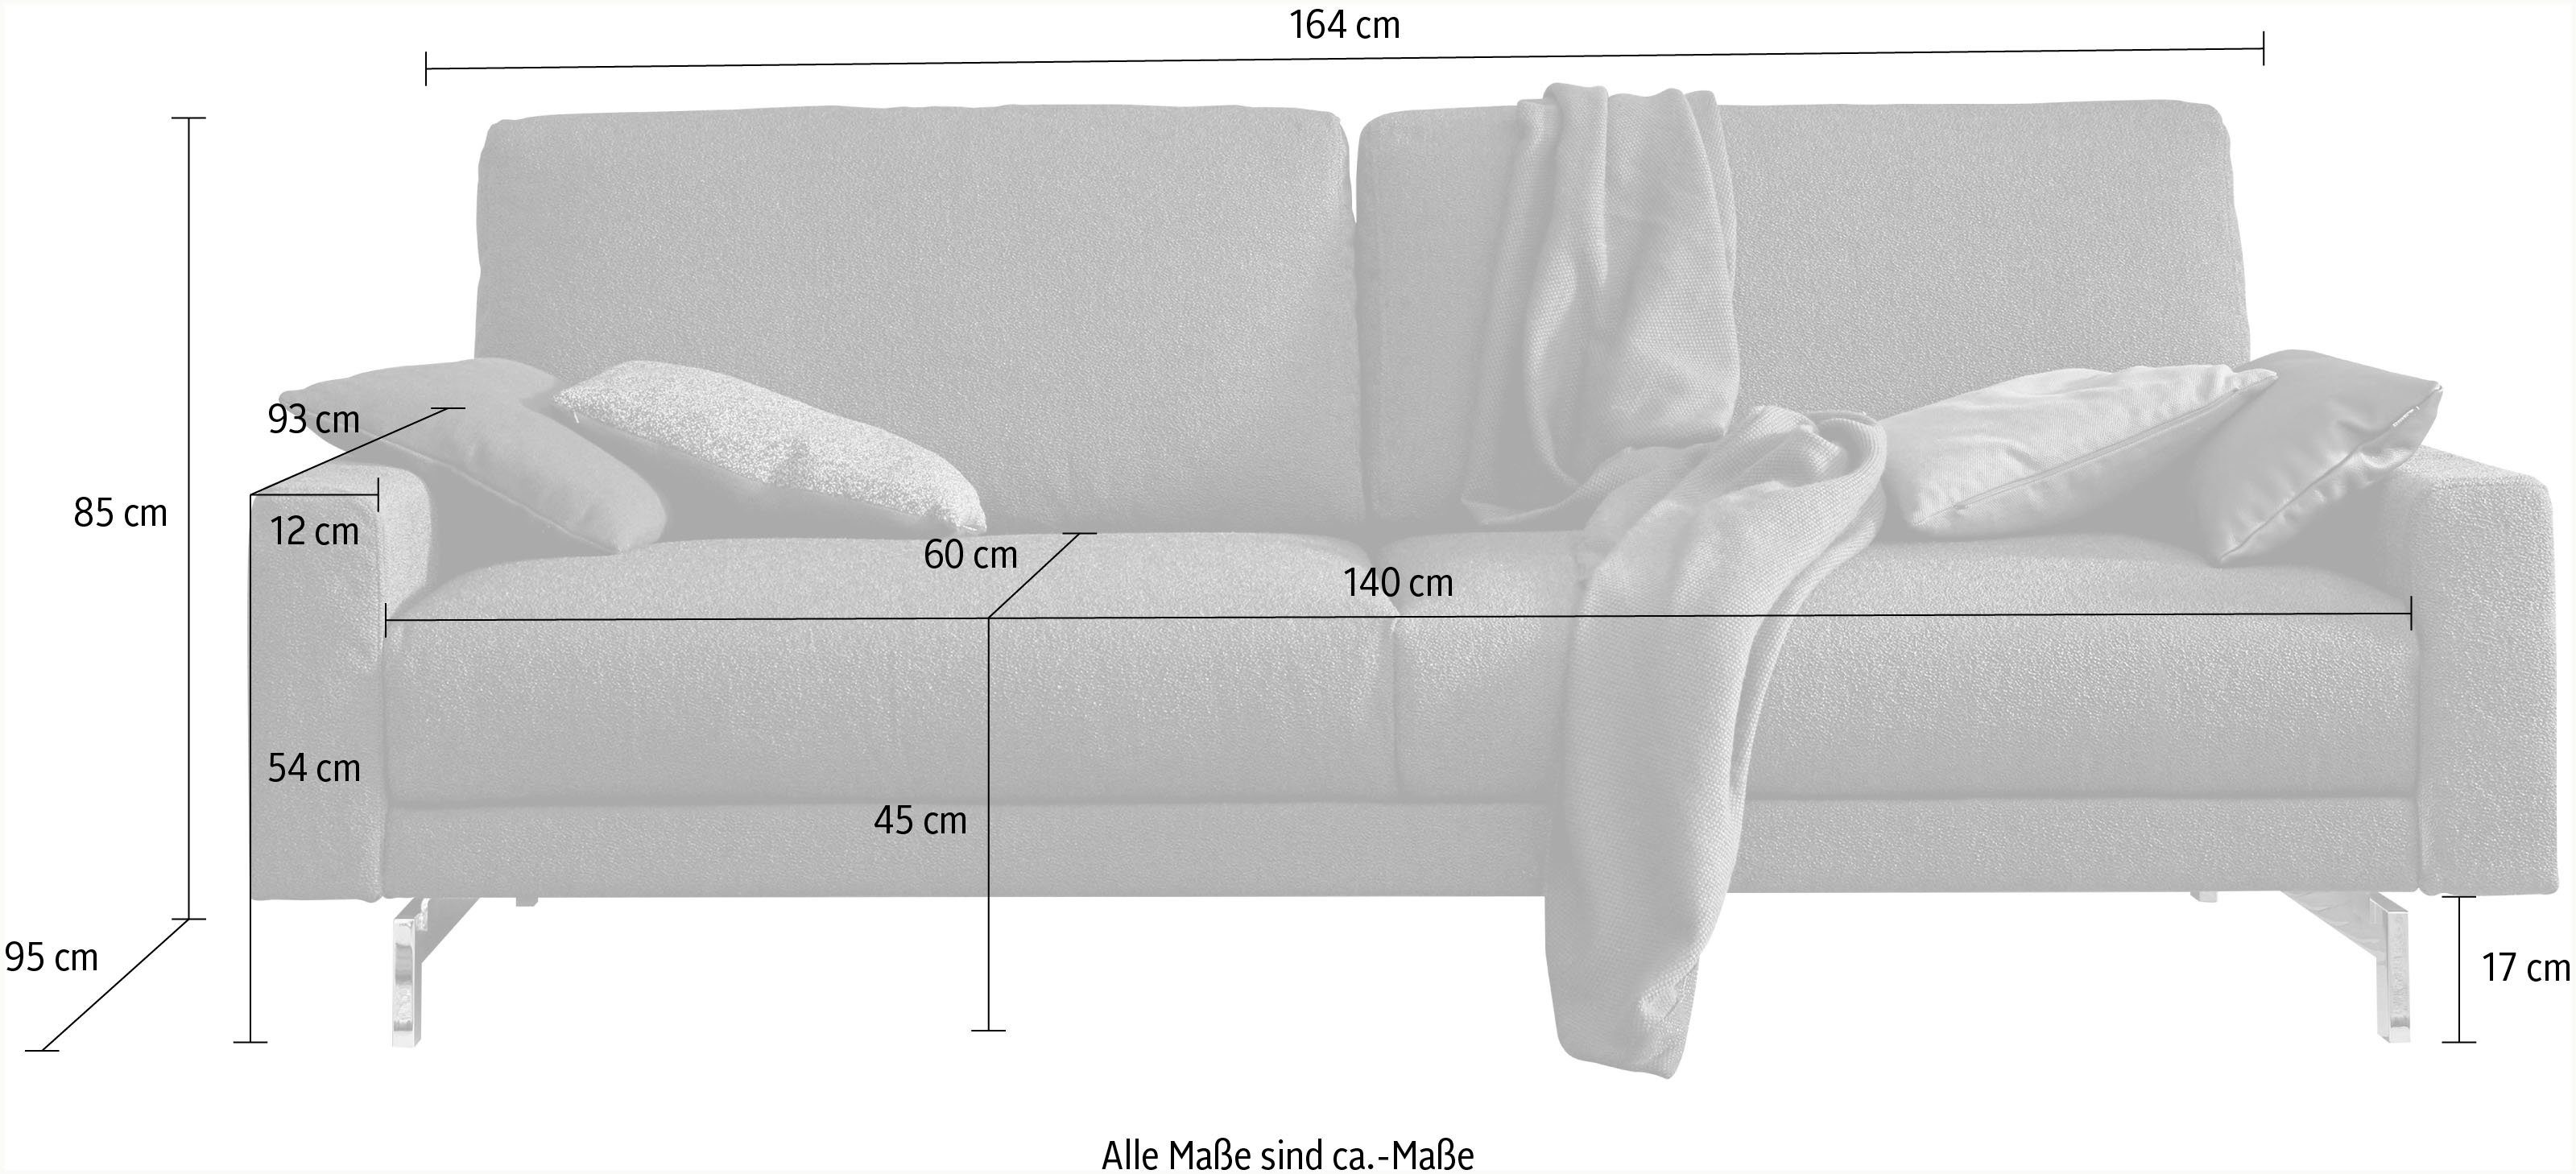 hülsta sofa 2-Sitzer hs.450, Armlehne Fuß cm niedrig, Breite chromfarben glänzend, 164